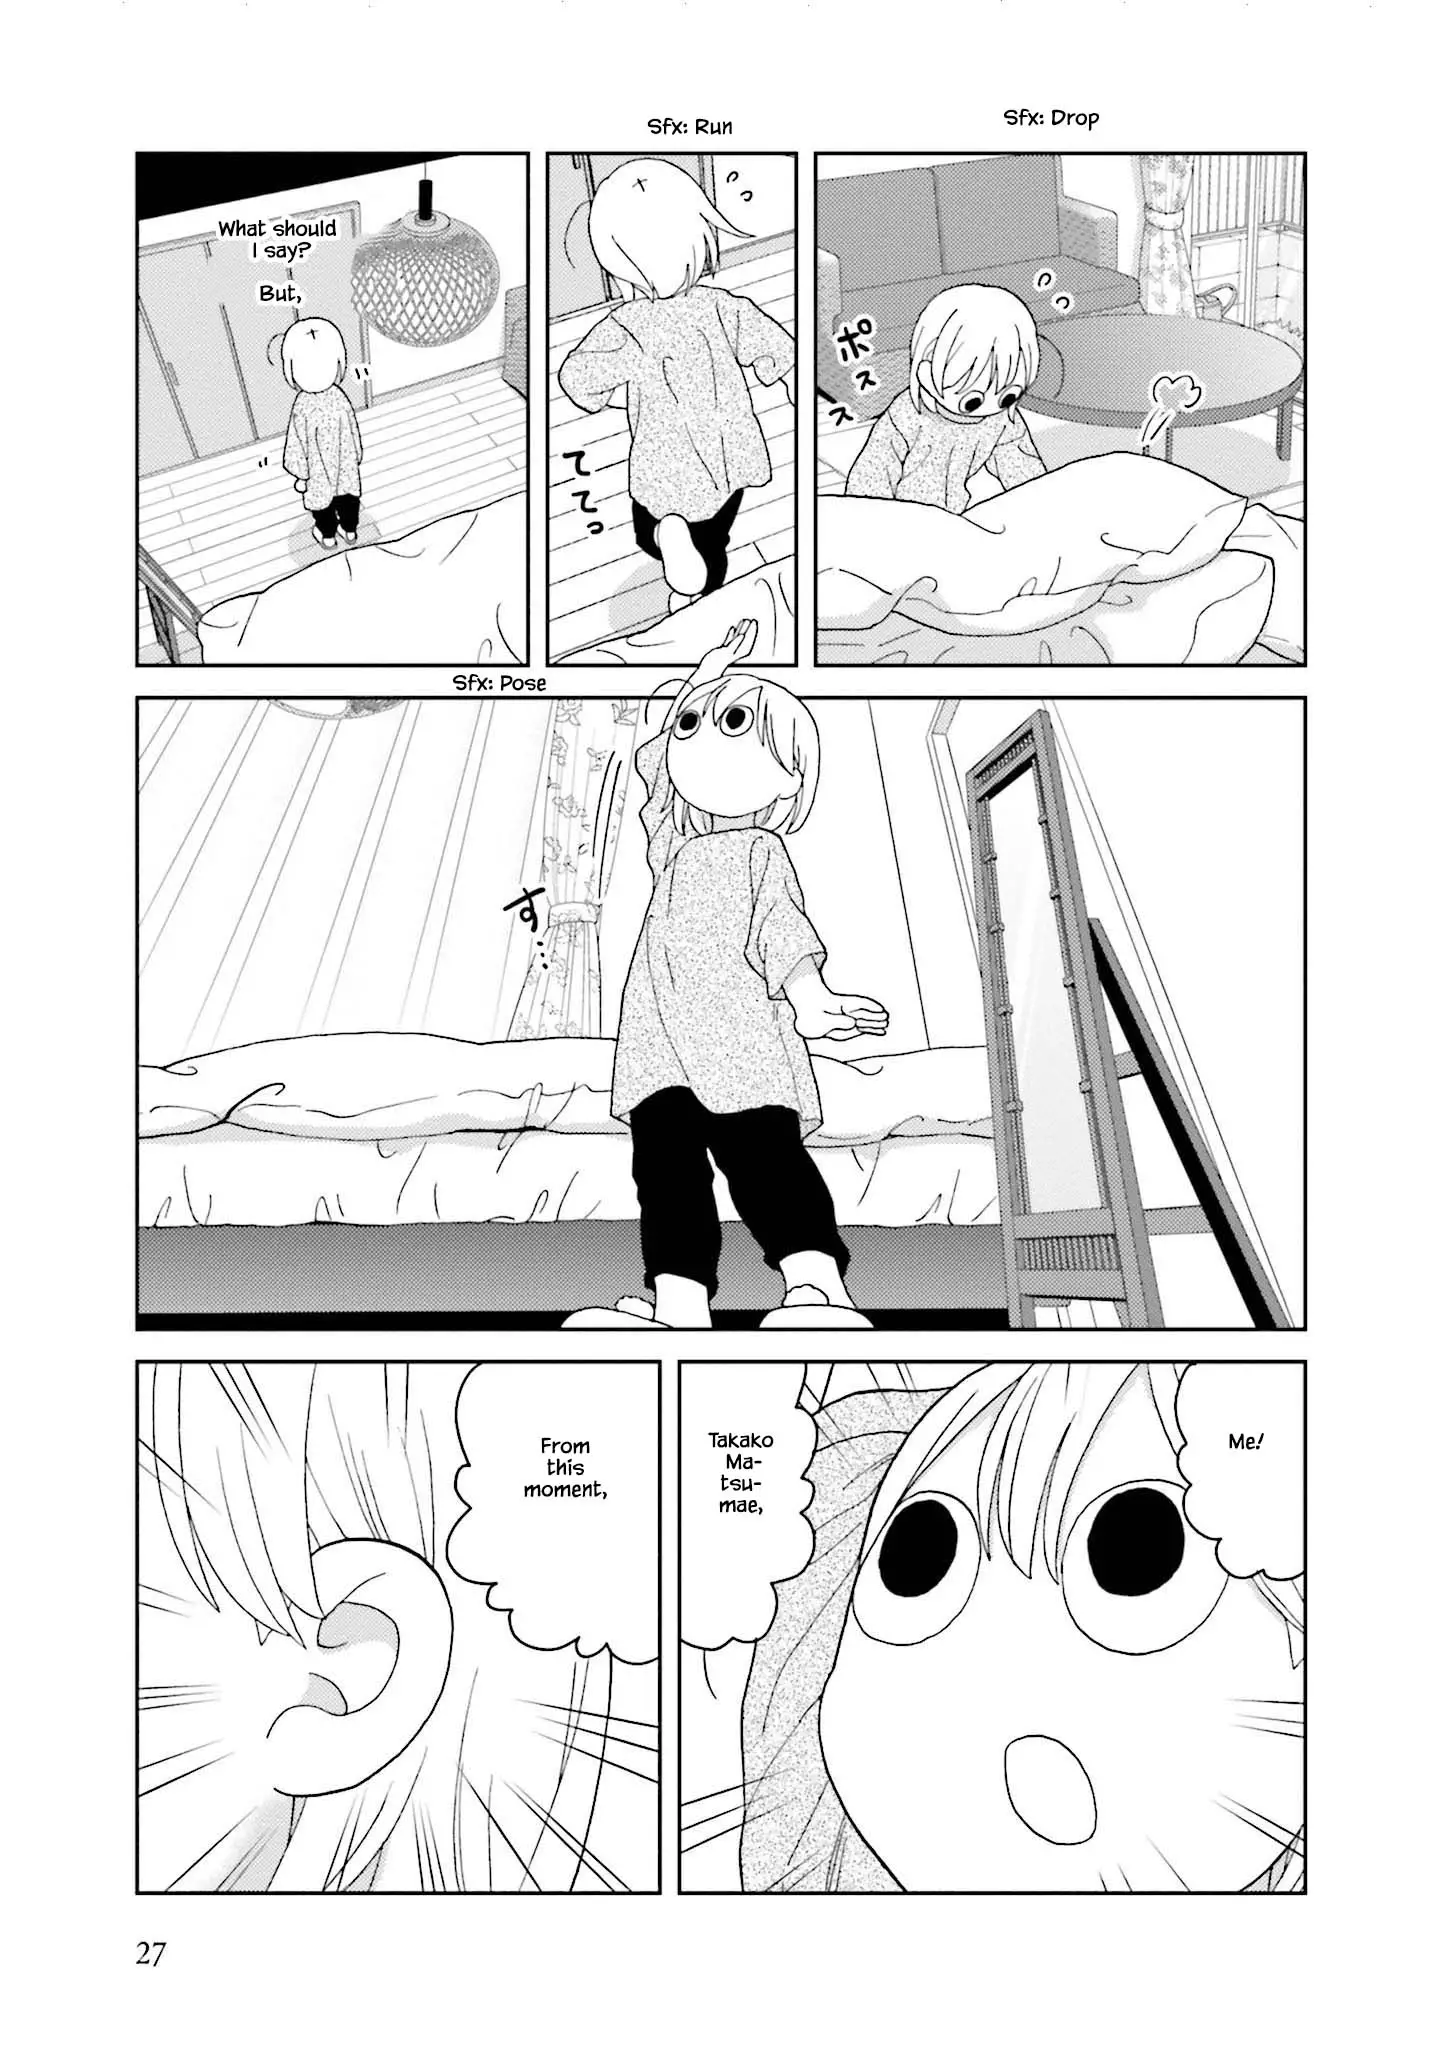 Takako-San - 66 page 5-82a04f87